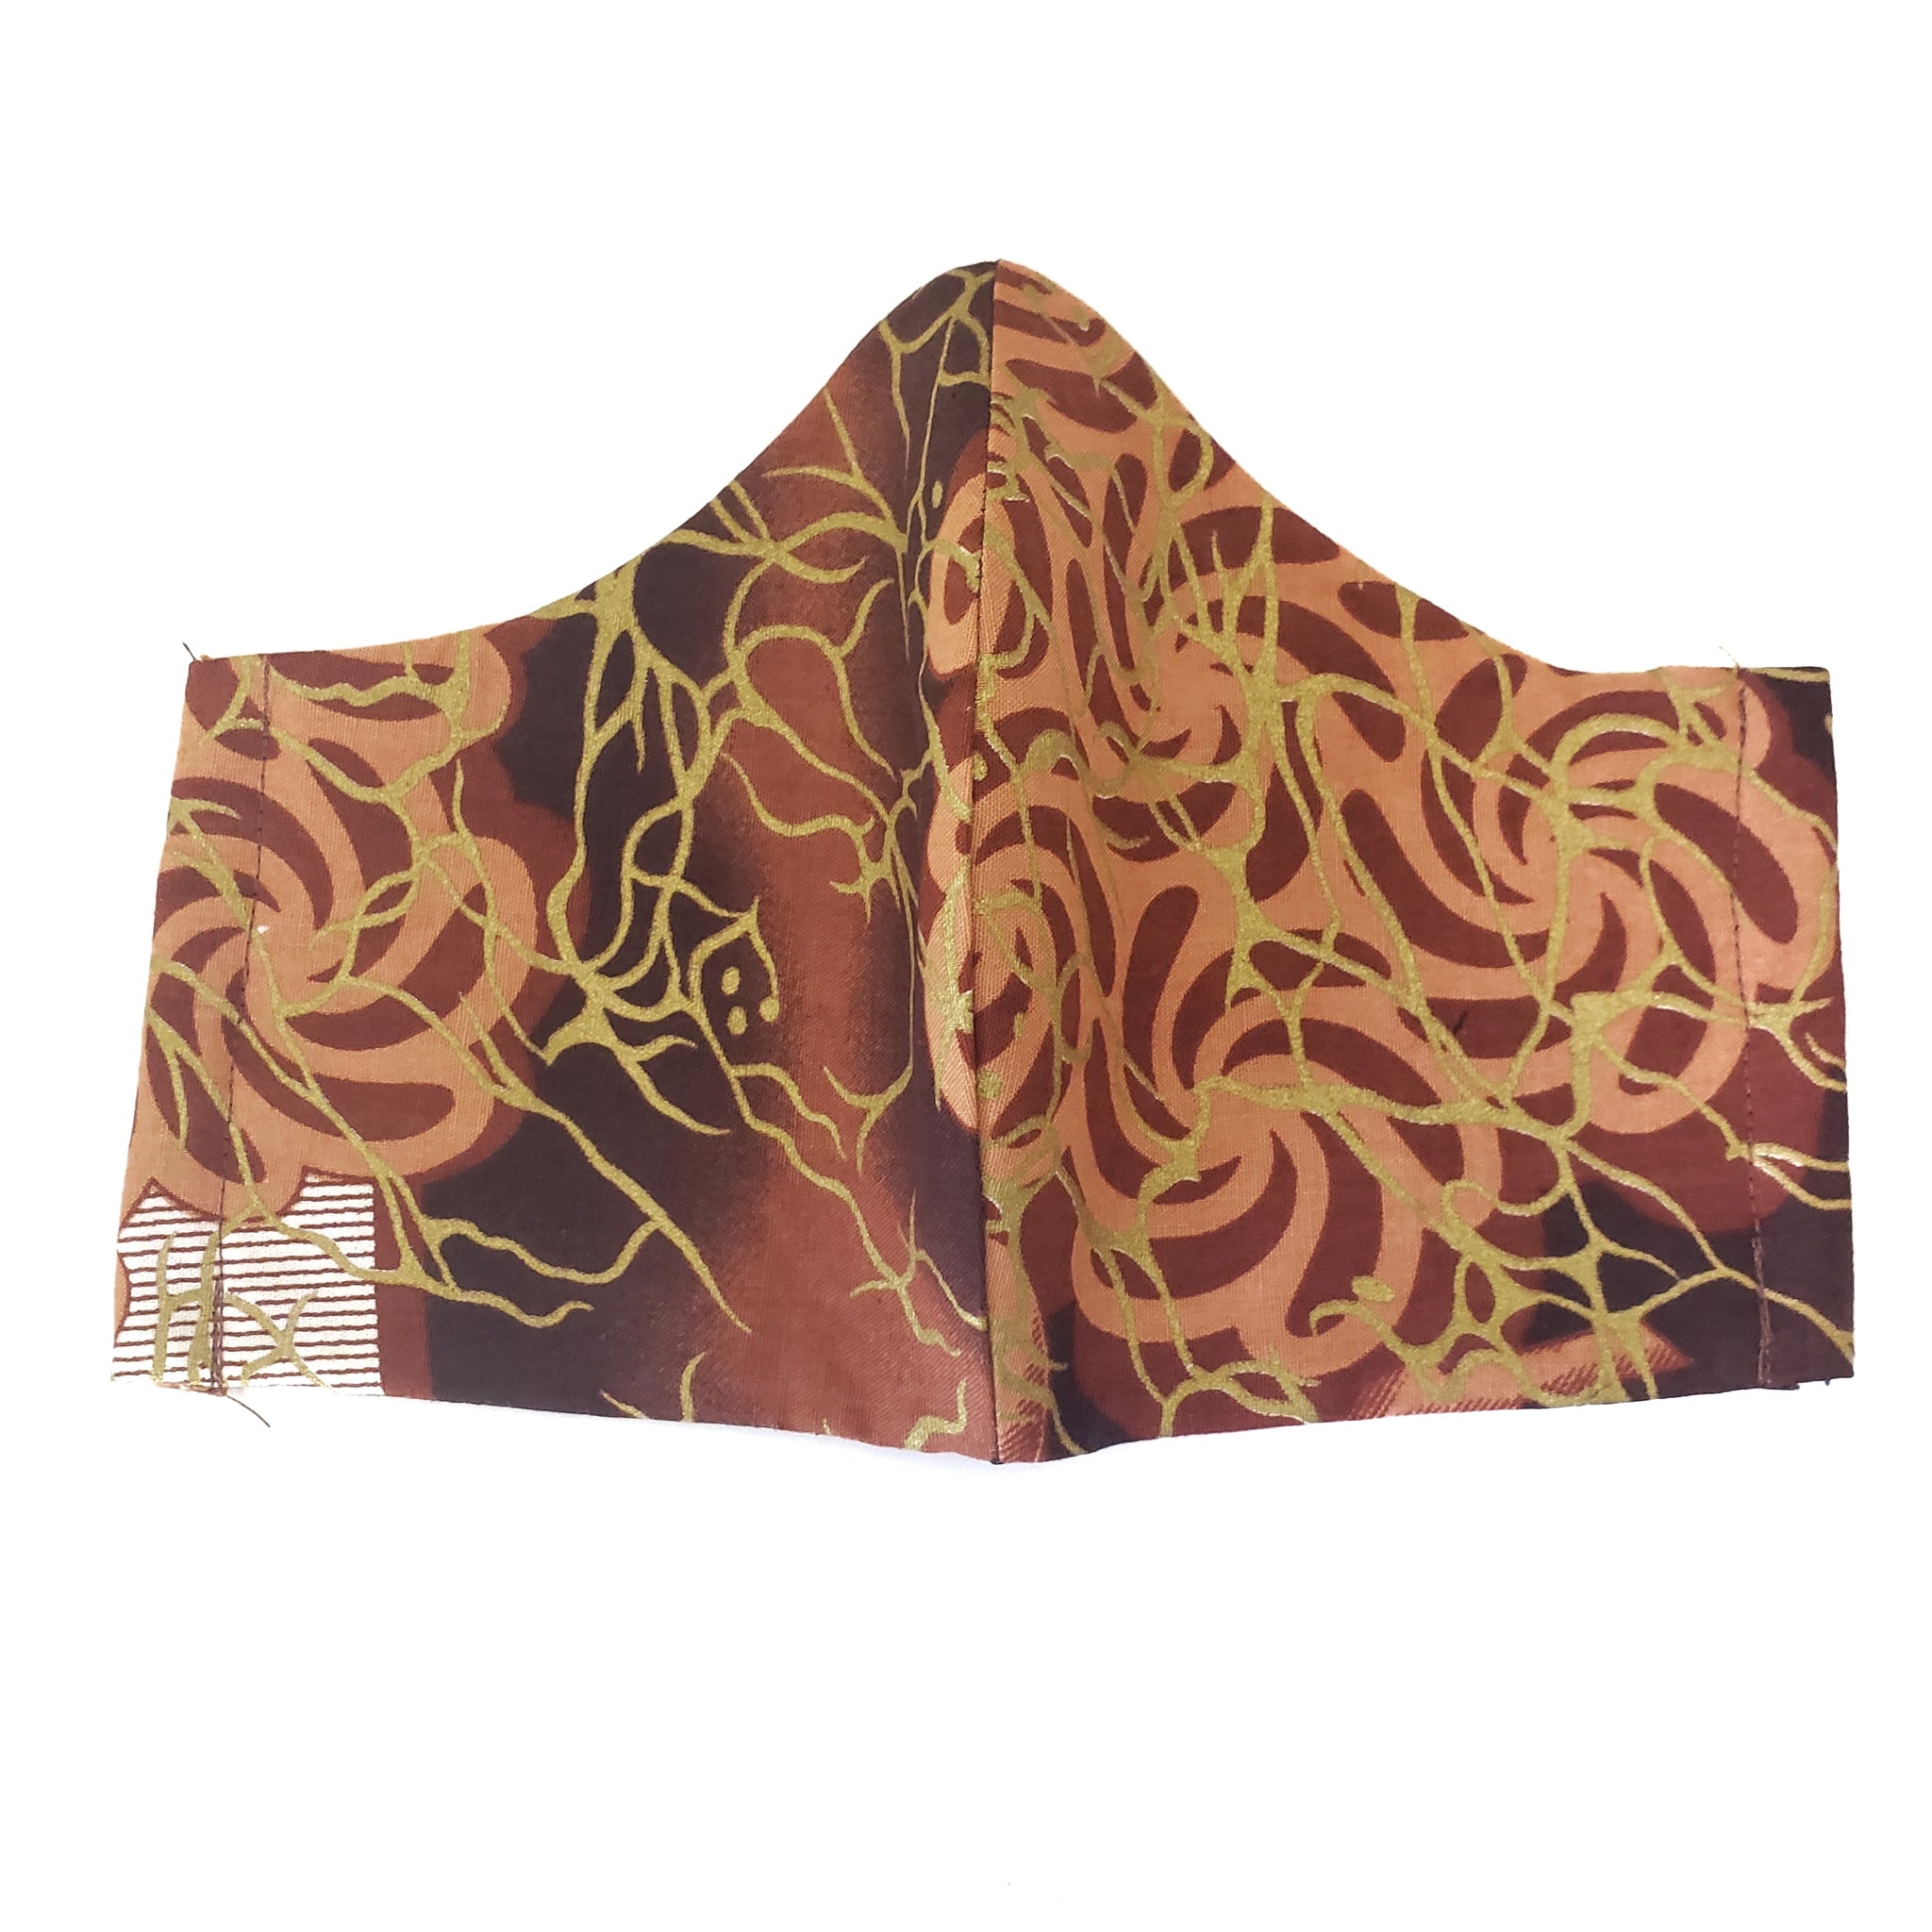 Cloth Face Mask Ankara African Print Batik Fabric 3 Layer